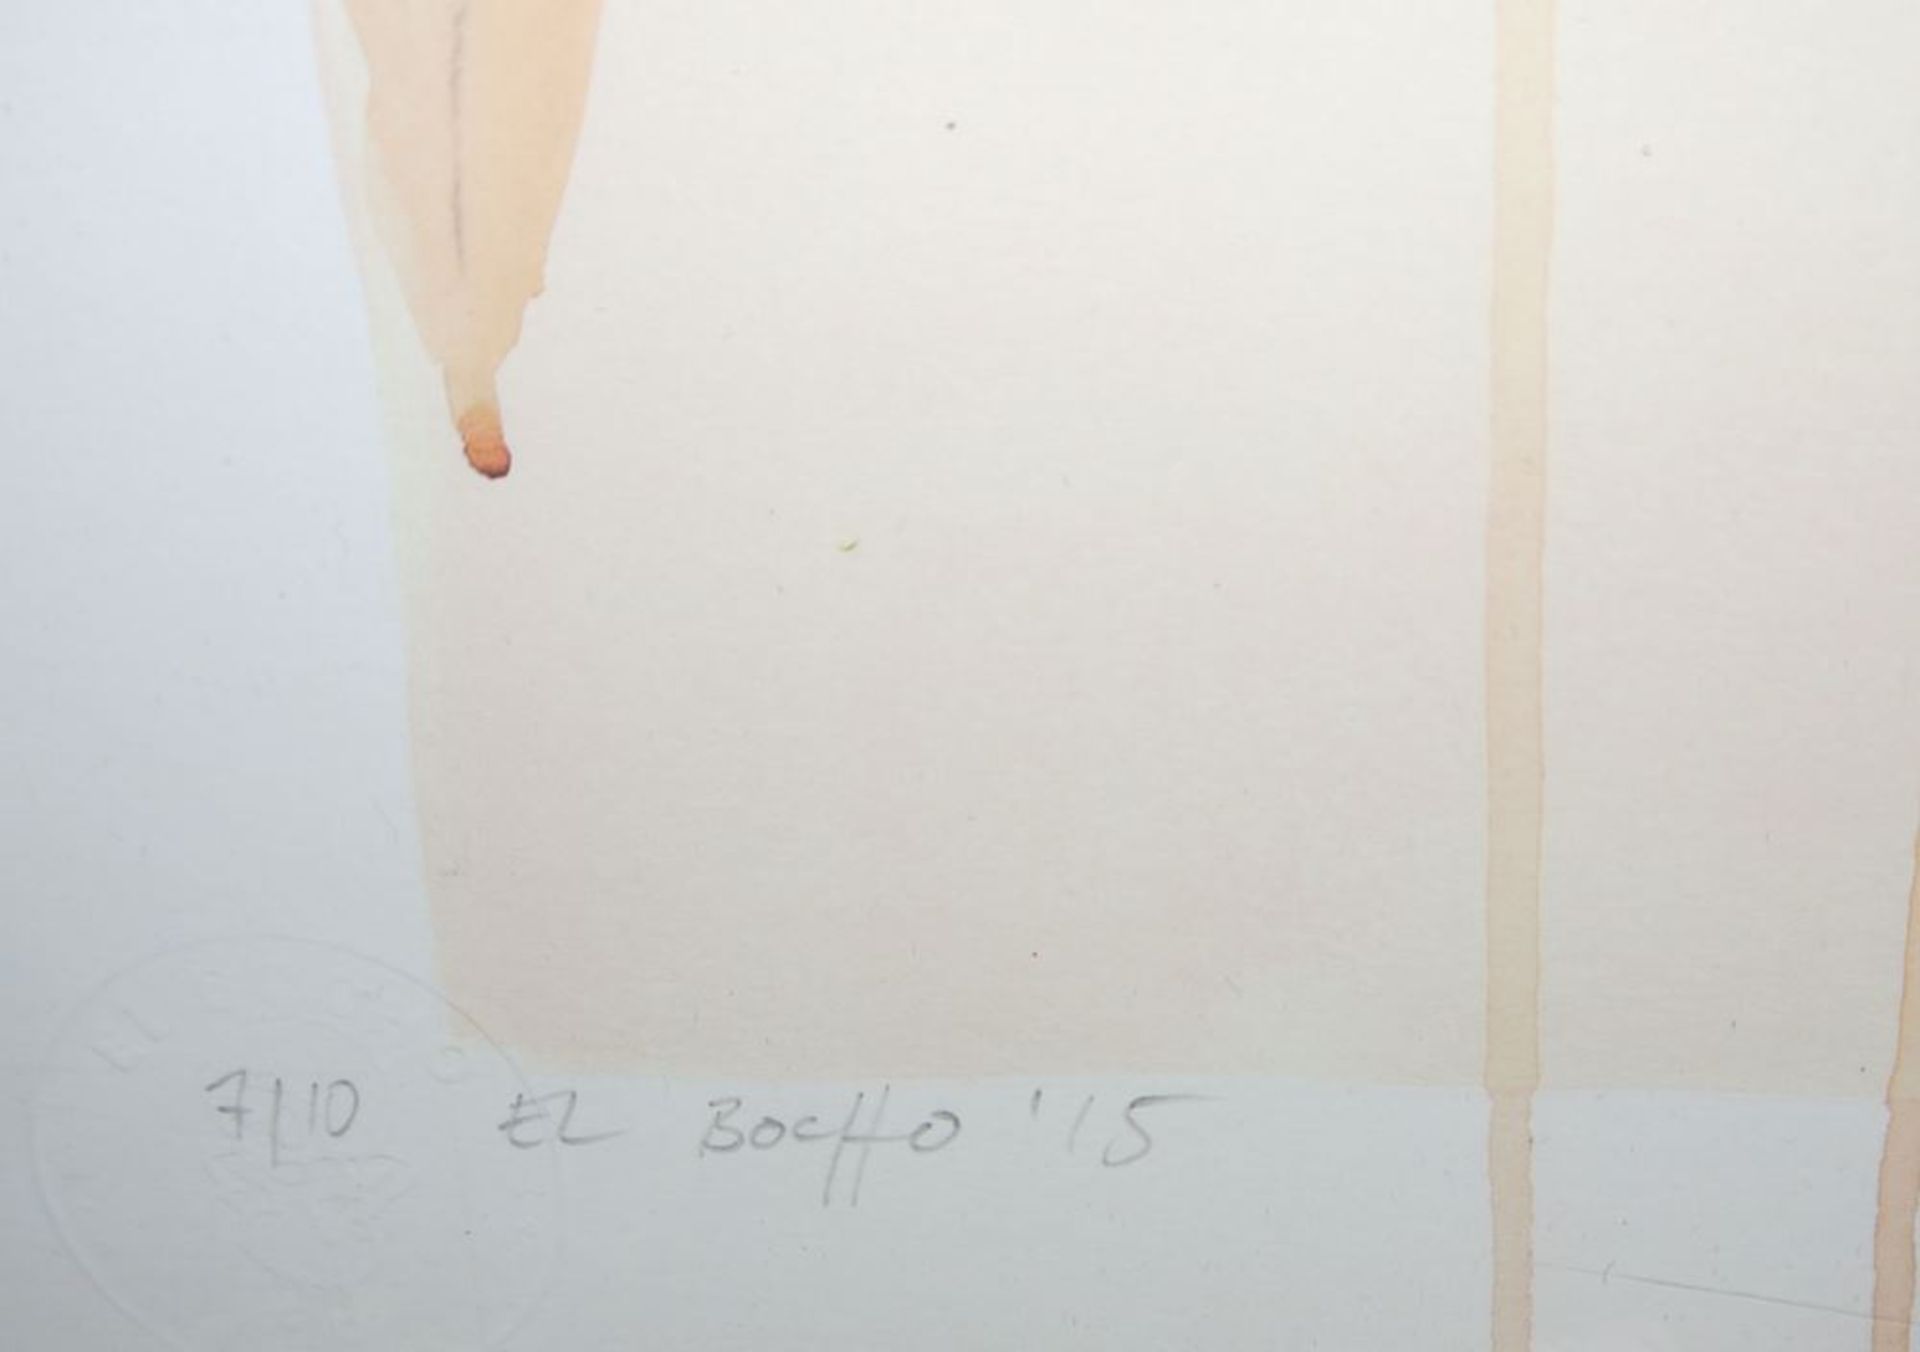 El Bocho, "Je t'aime Berlin", 2015, fineart print, hand-finished, signed, framed - Image 2 of 2